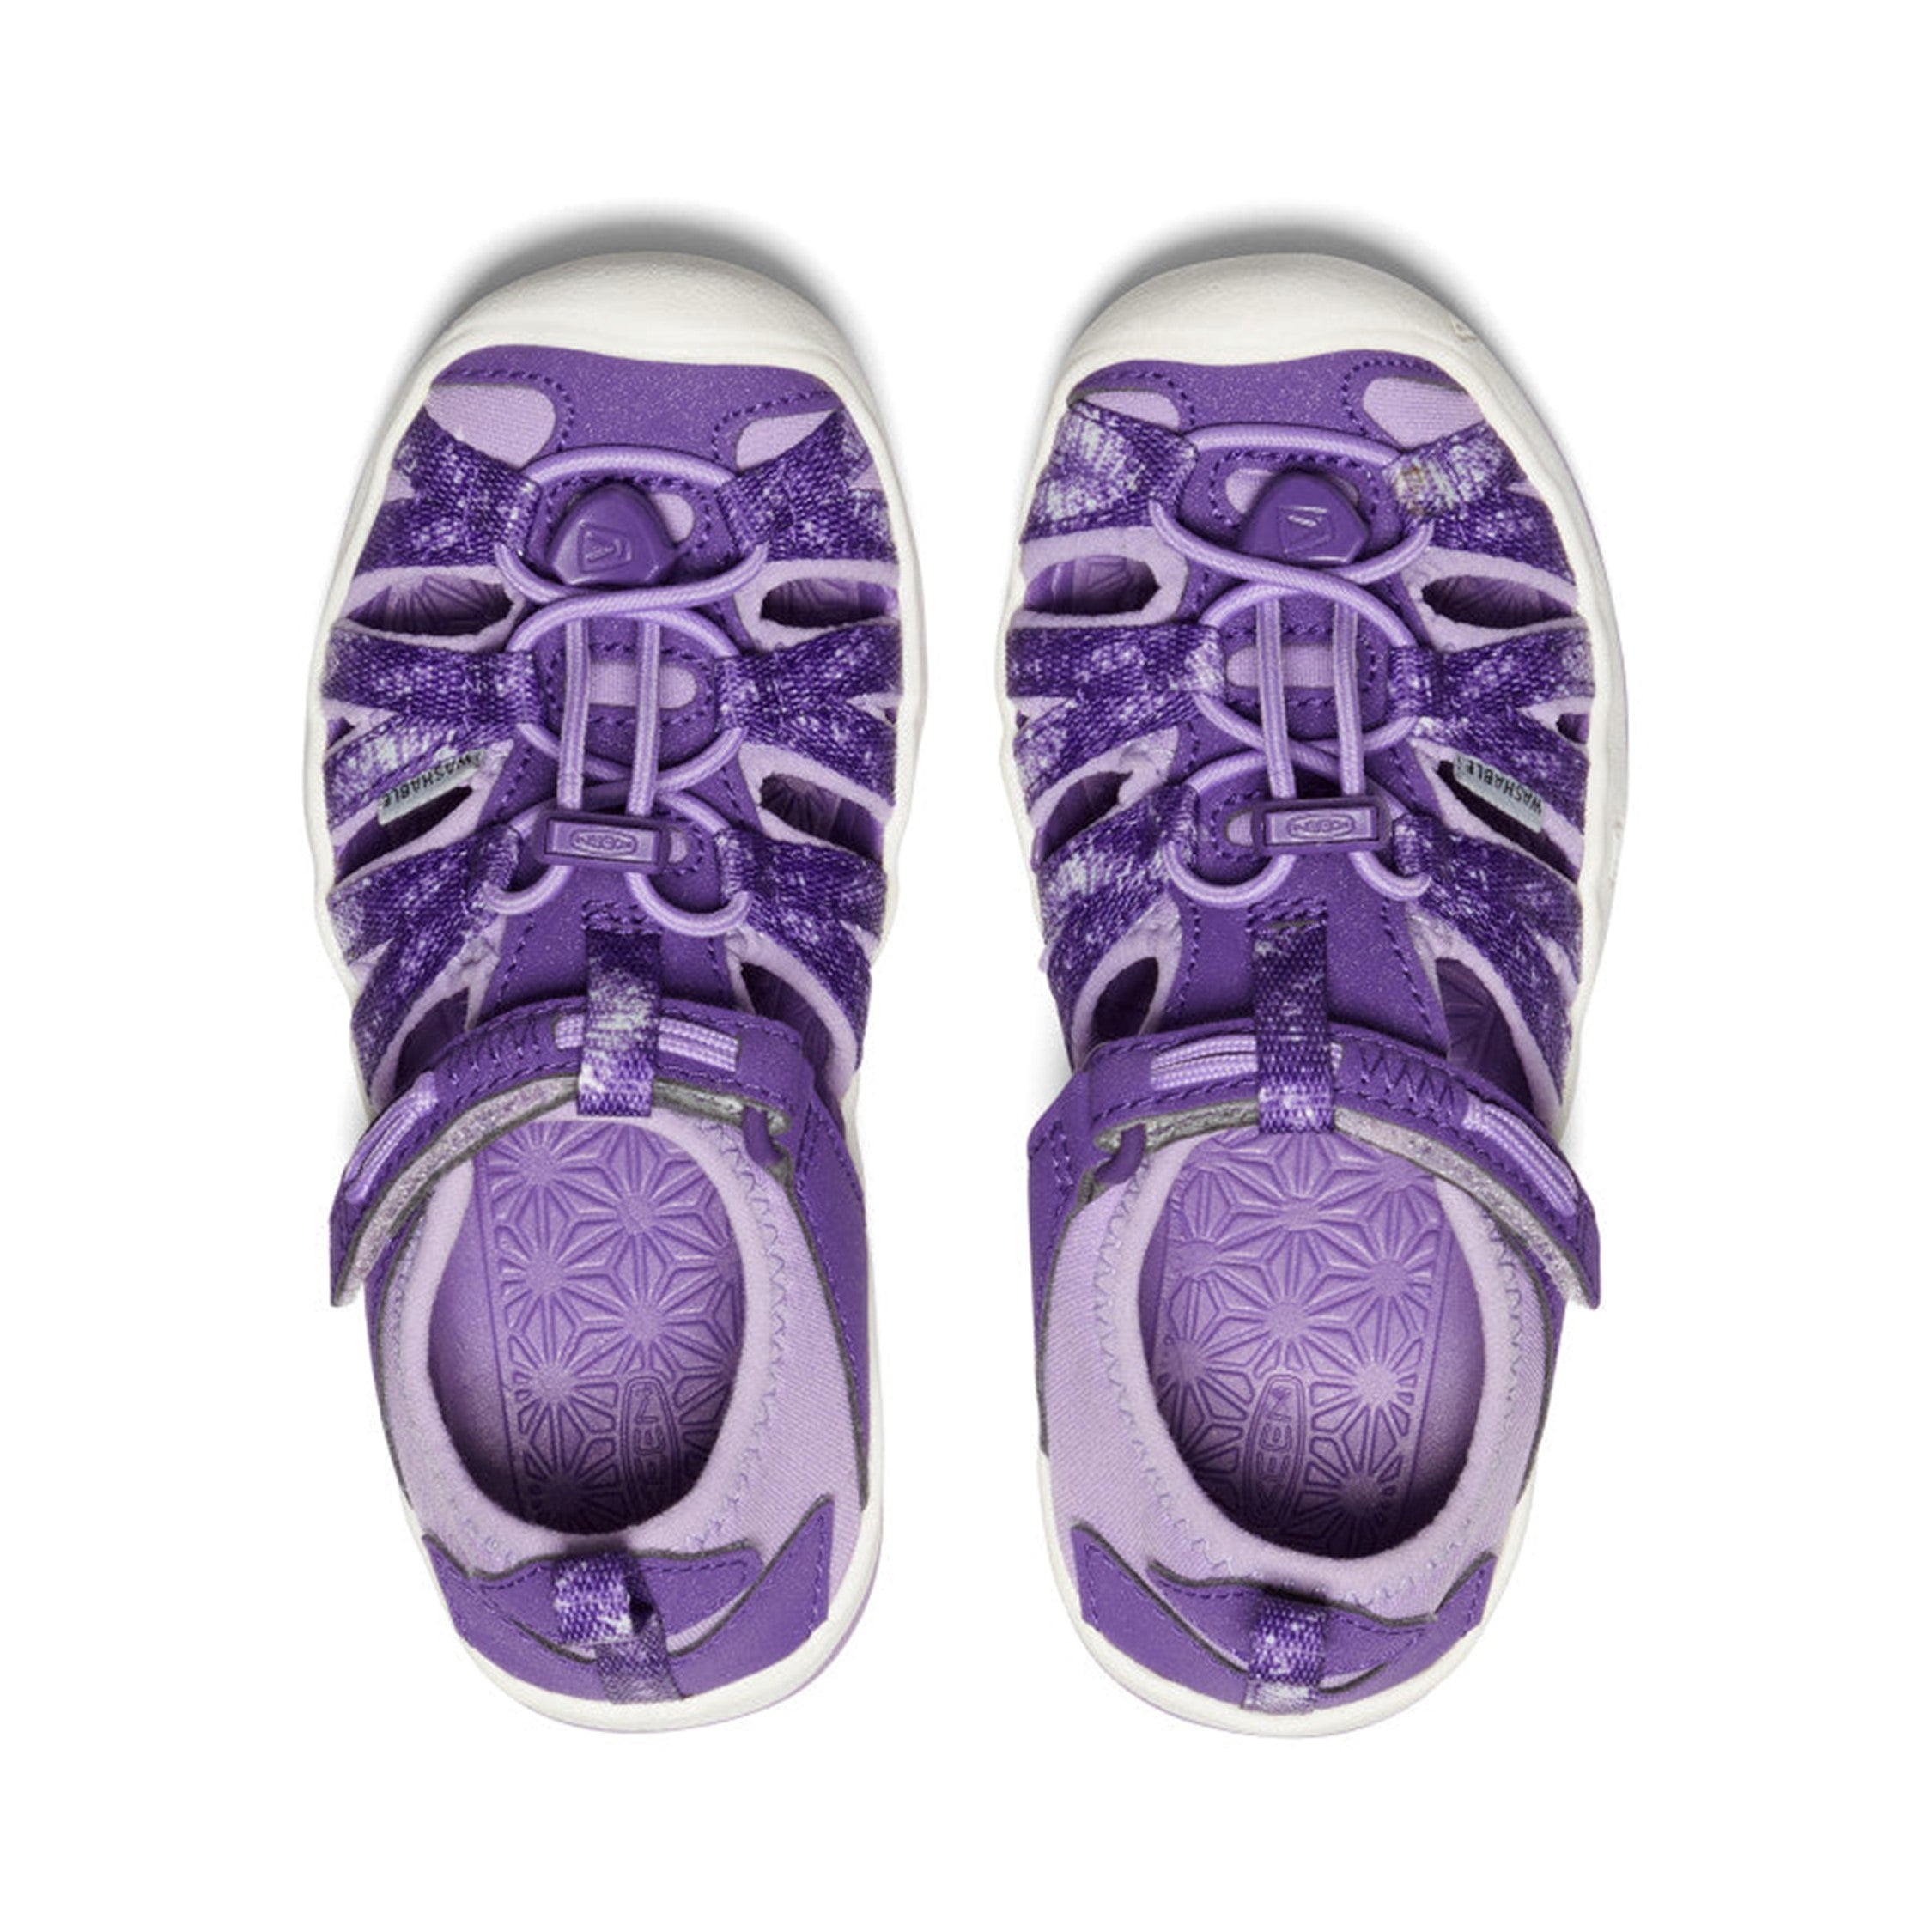 Moxie Kids' Active Sandal - Multi/English Lavender